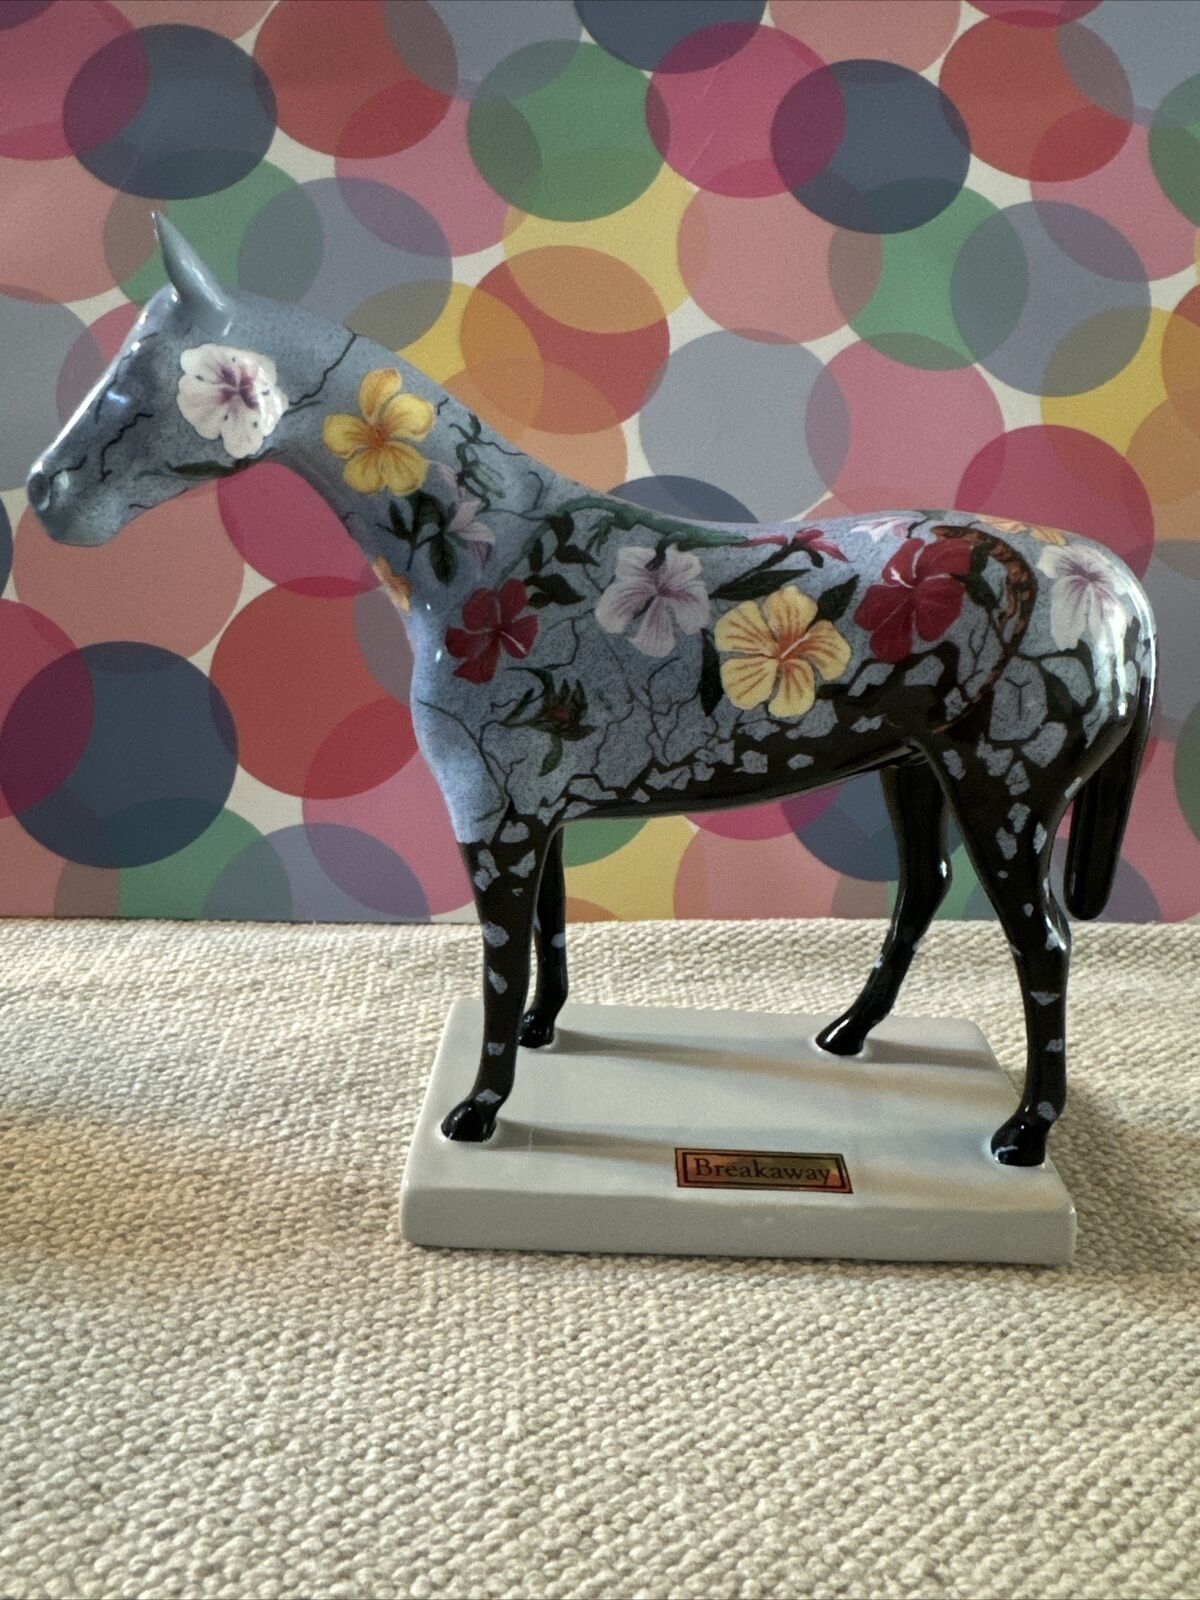 Horse Fever “Breakaway” Figurine   Ocala Florida Public Art Project